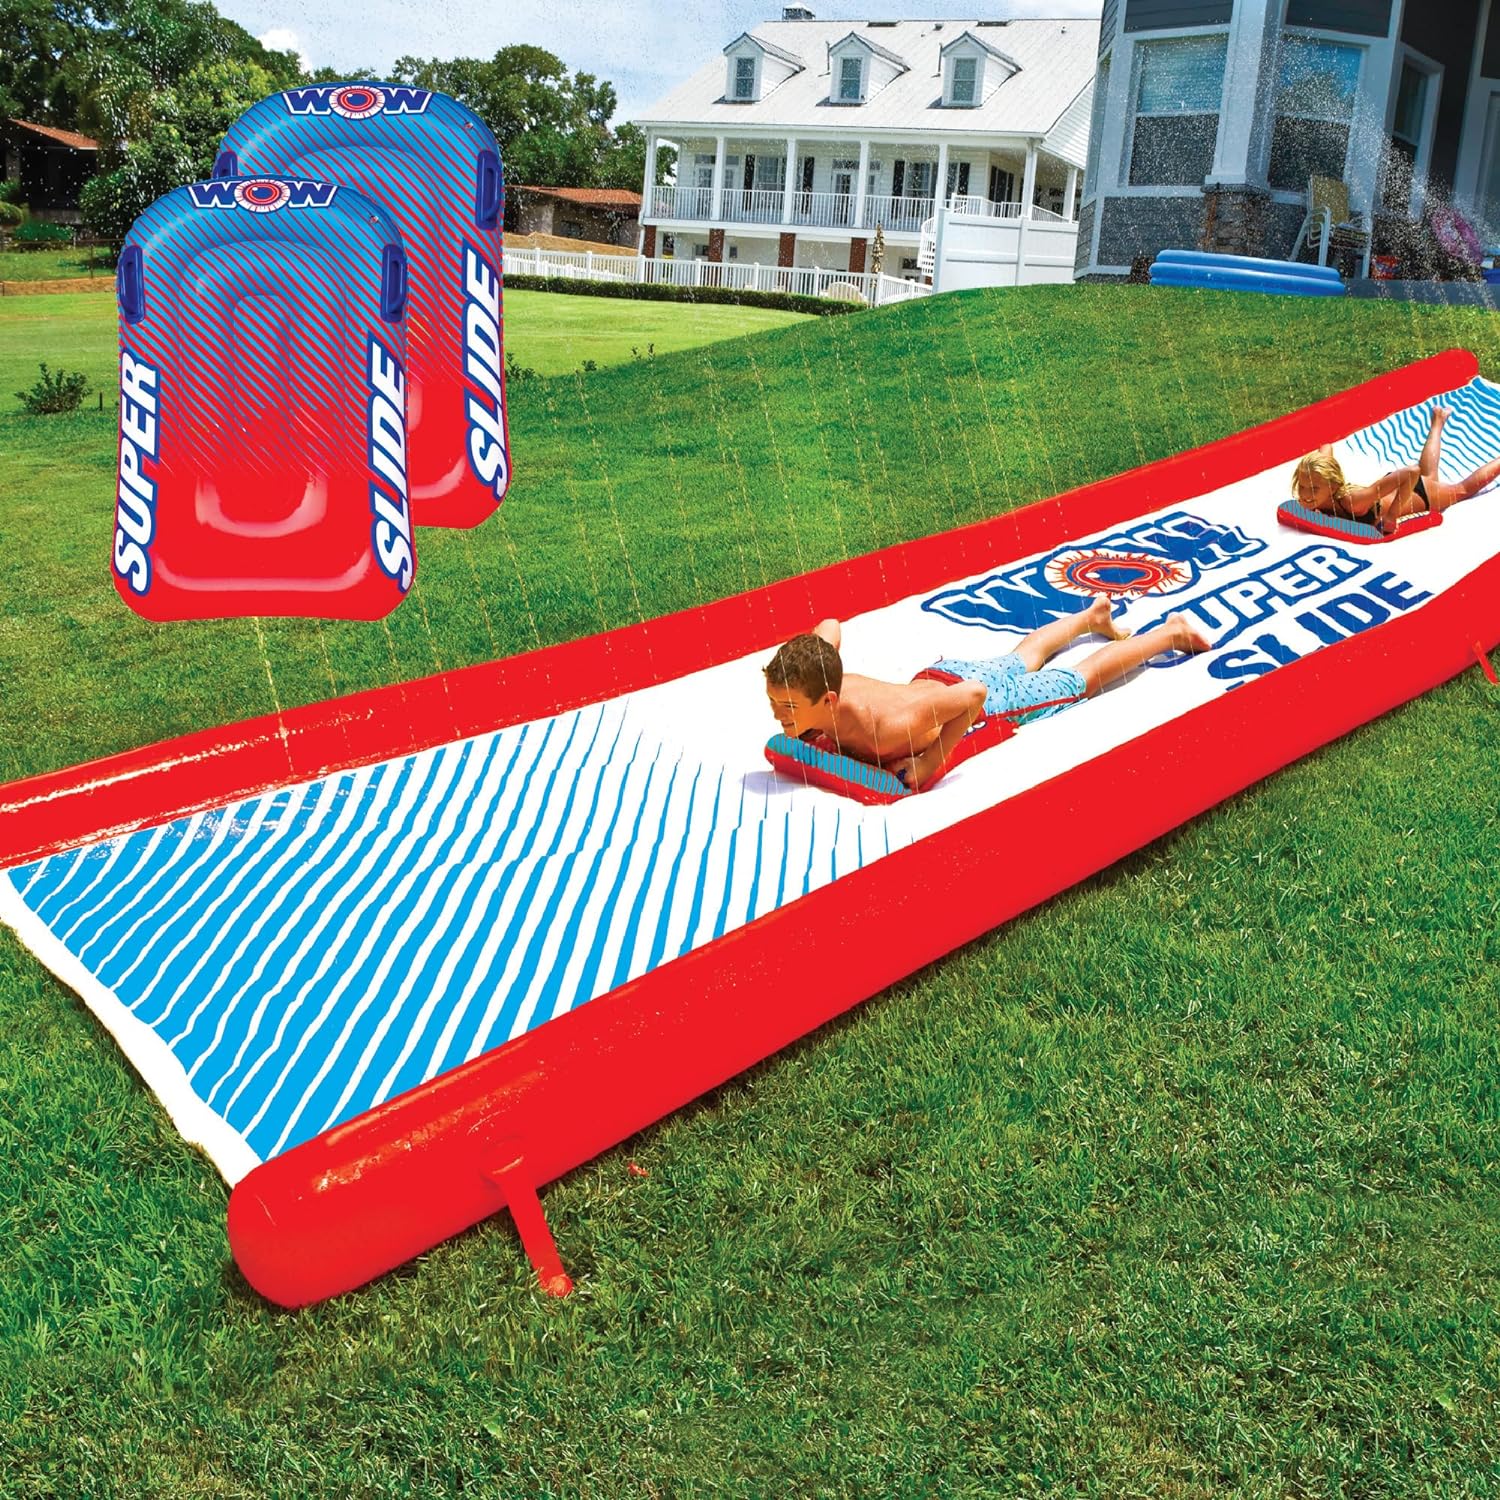 WOW Sports Super Slide - Giant Backyard Slip and Slide with Sprinkler, Extra Long Water Slide 25 ft x 6 ft